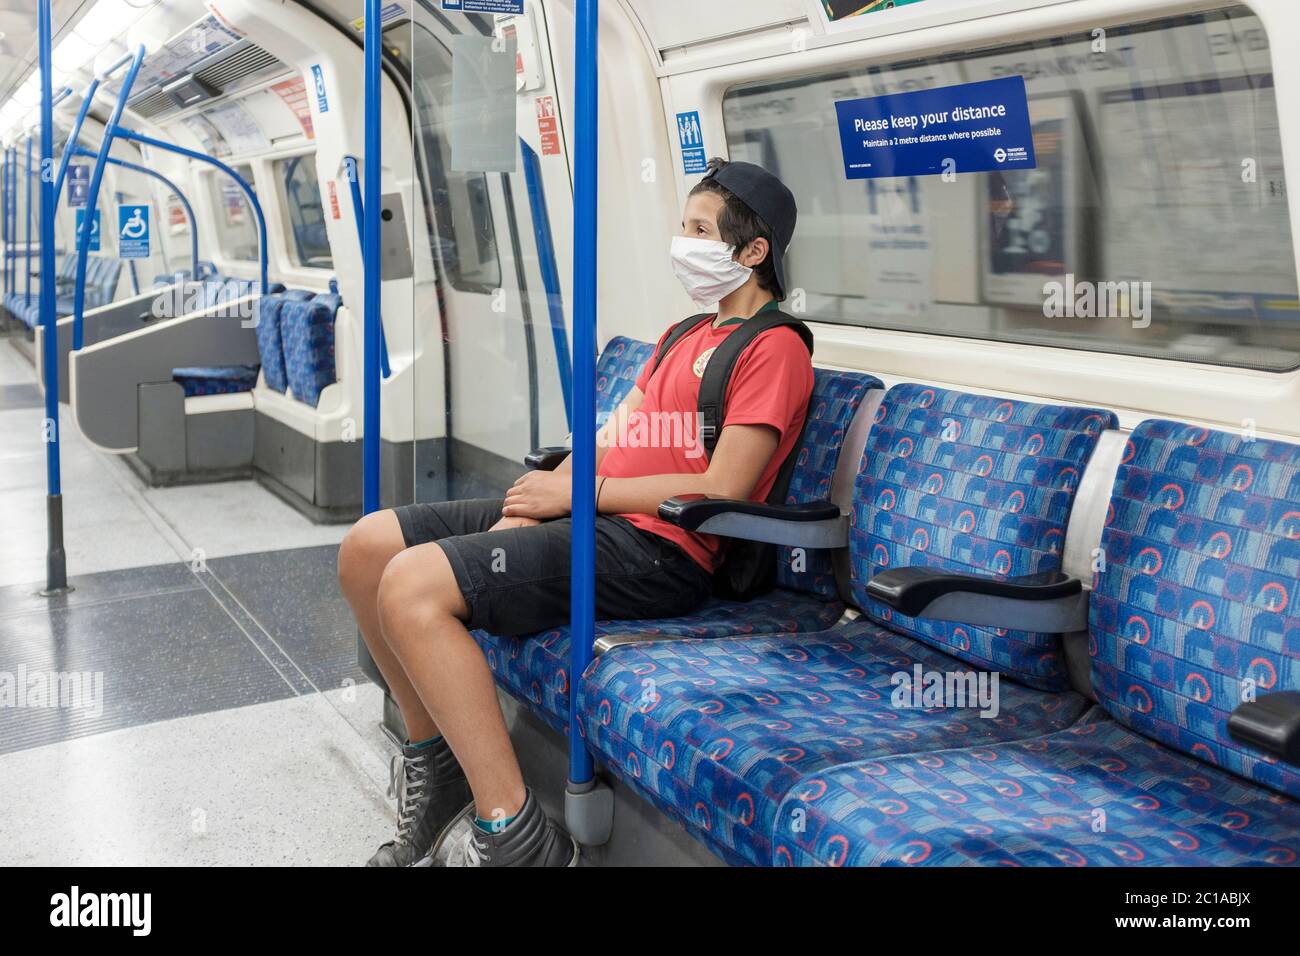 London, UK. 15th June, 2020. Coronavirus: Face coverings now mandatory on public transport.boy wearing a  face mask travels on London Undergound. Stock Photo